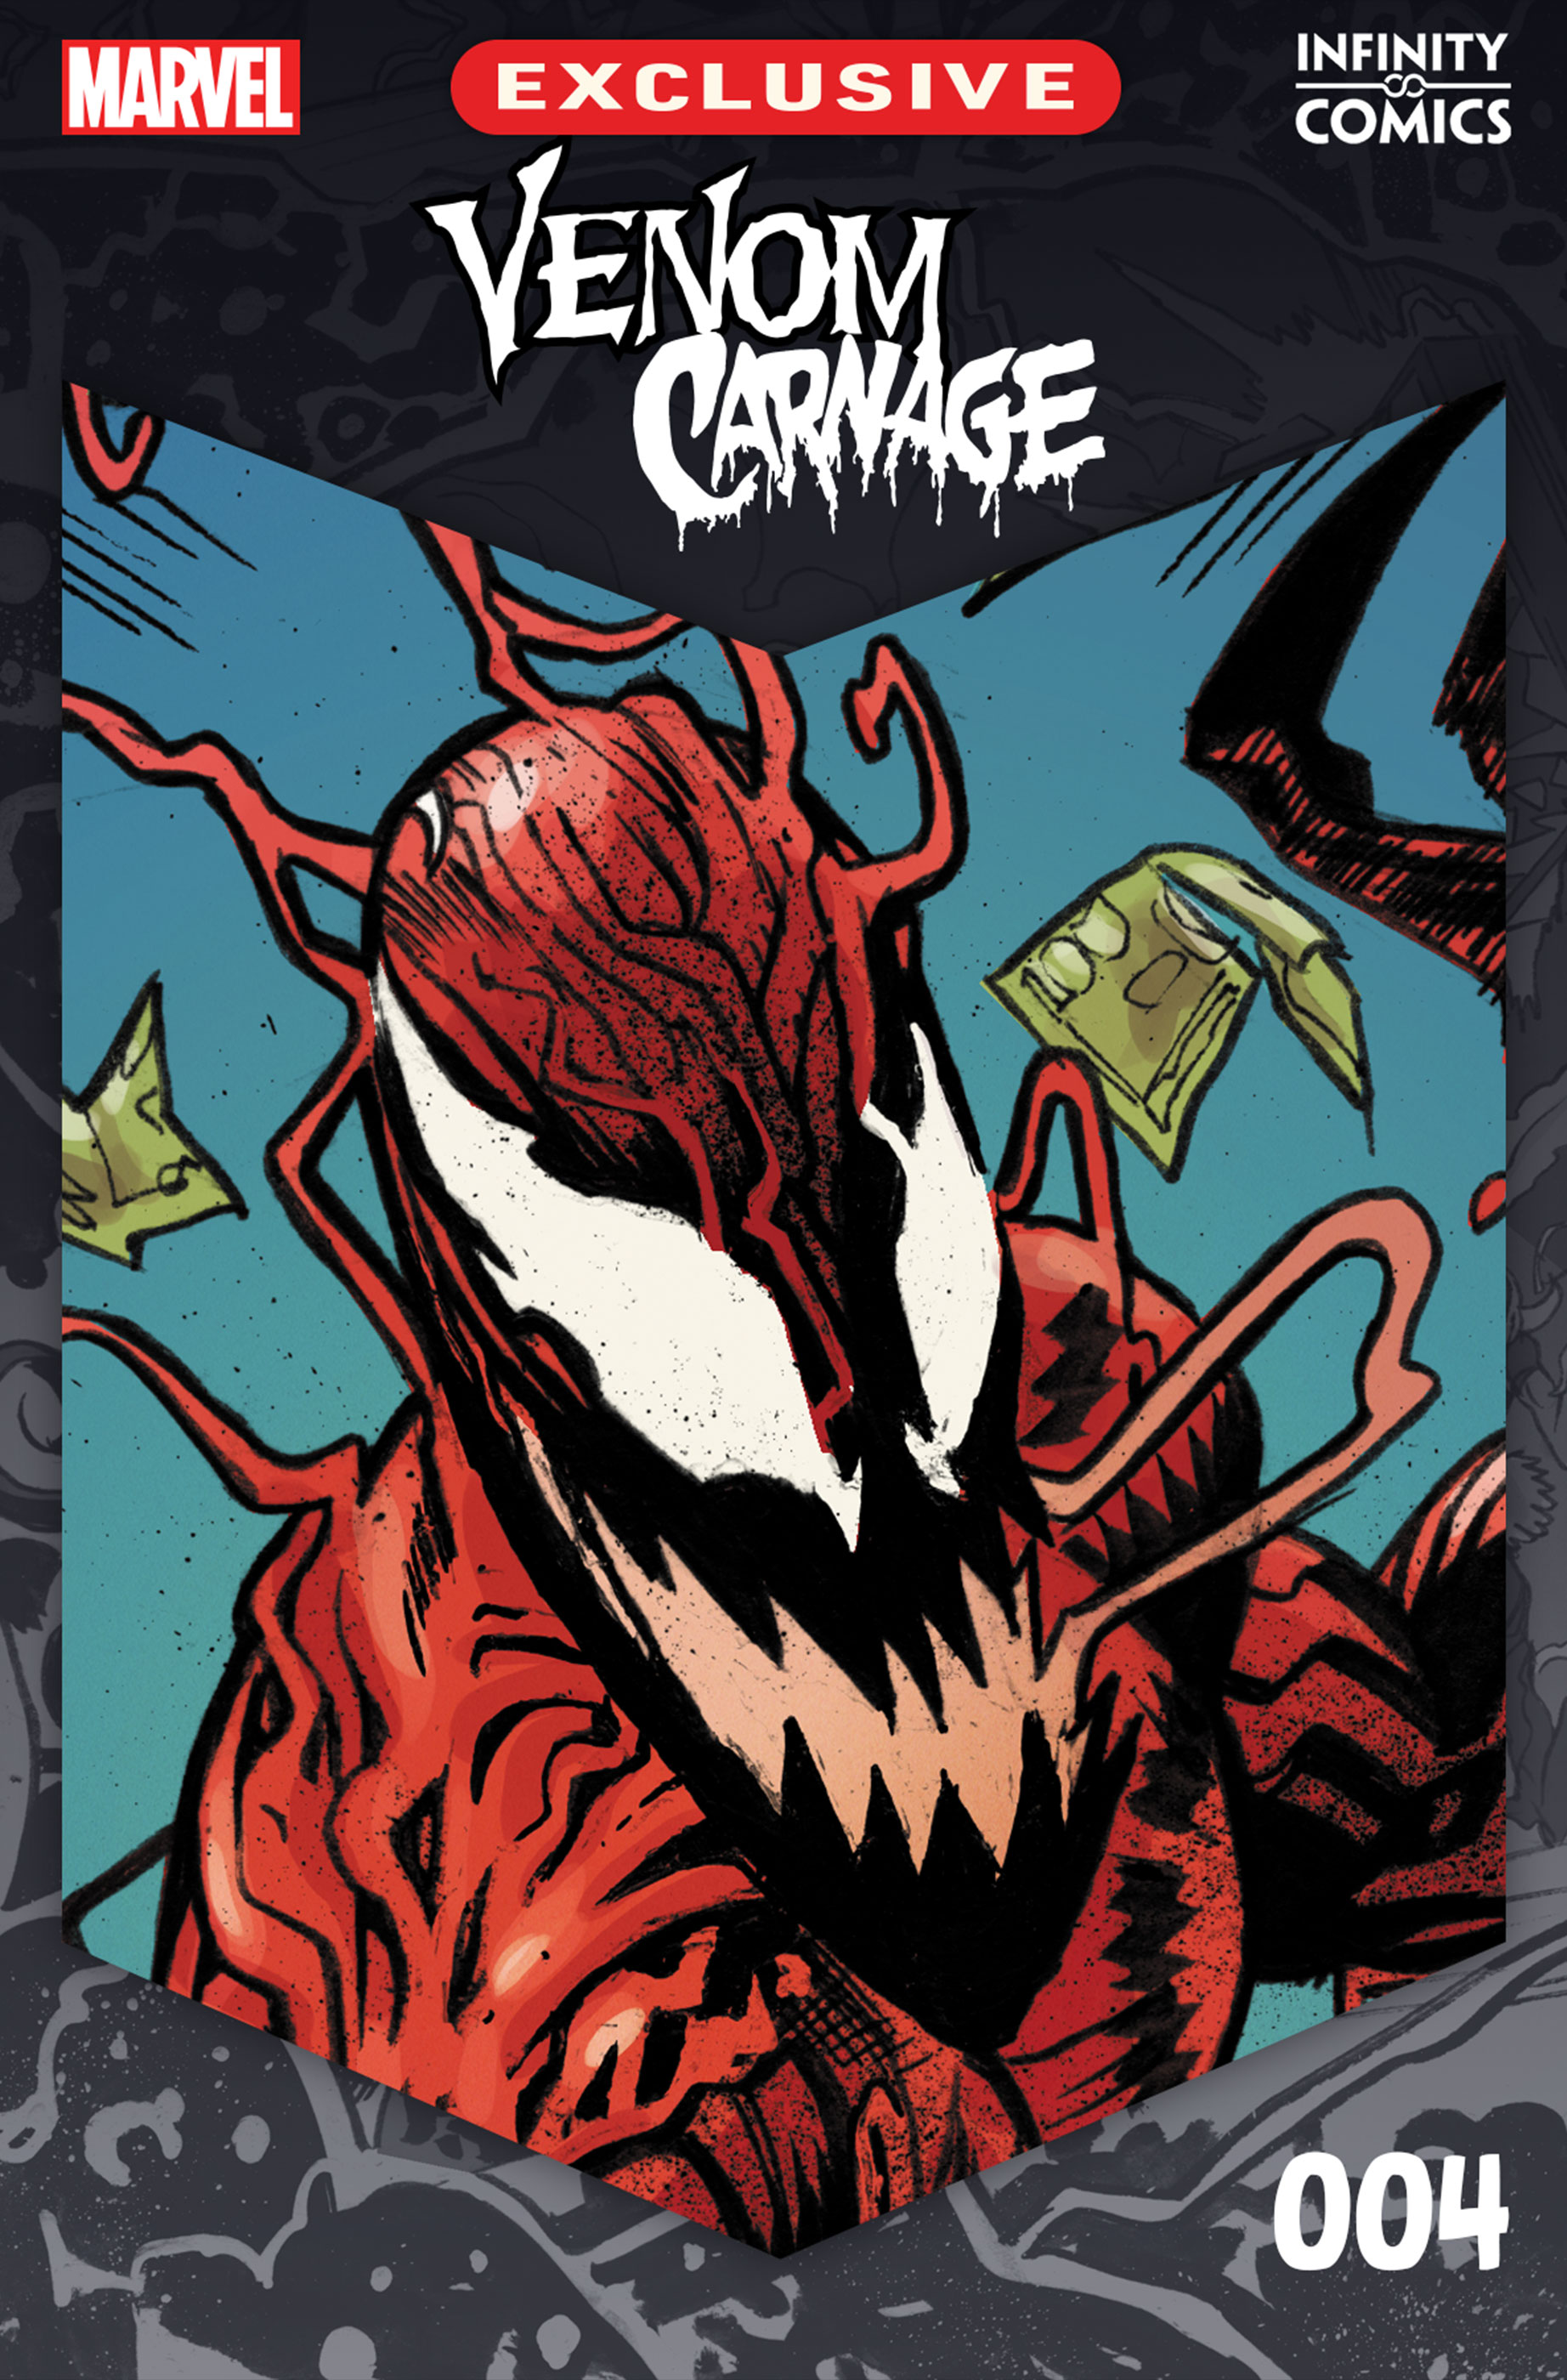 Venom/Carnage Infinity Comic (2021) #4